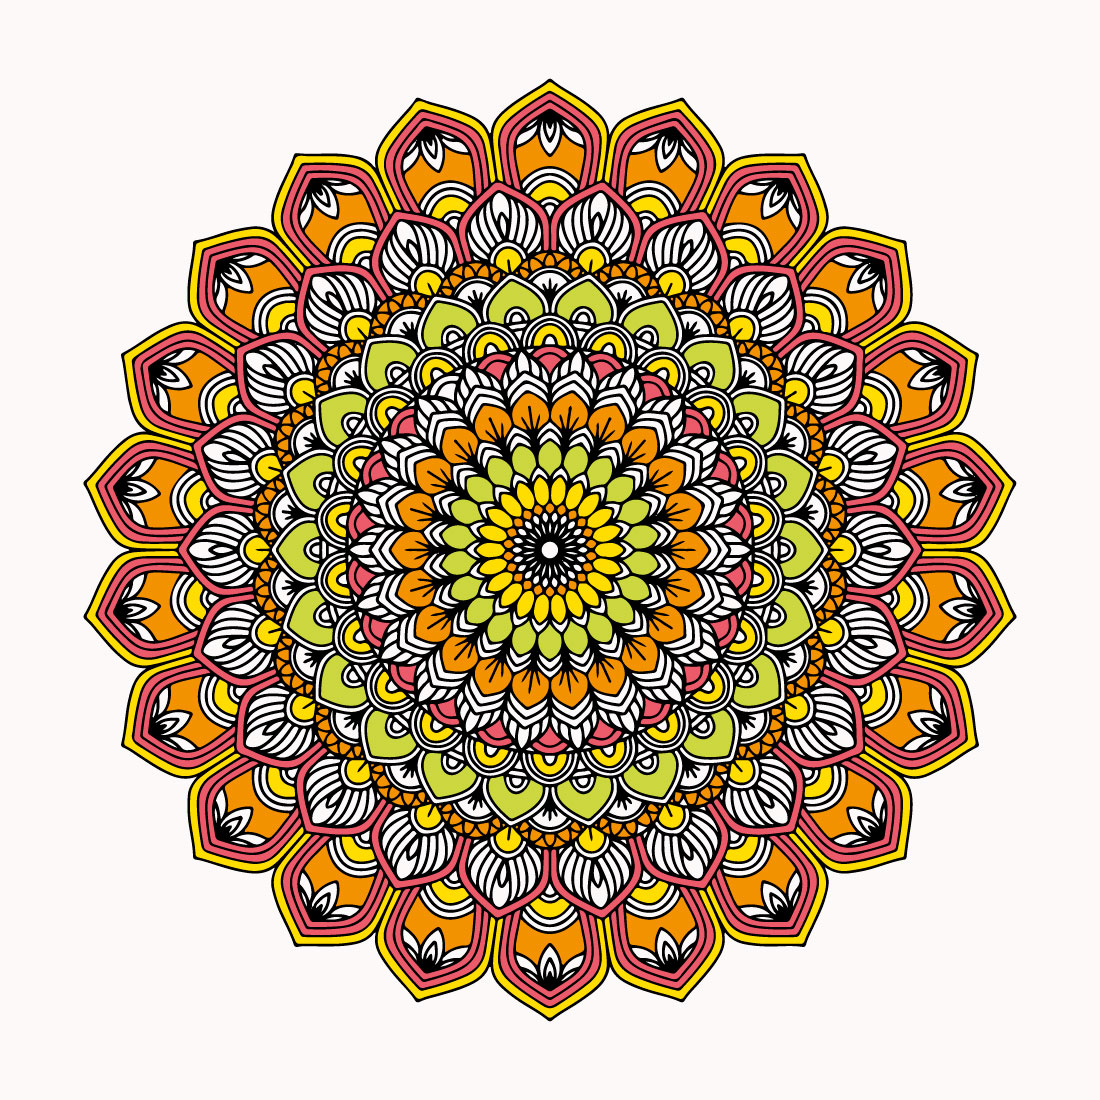 Floral Mandala Design Template cover image.